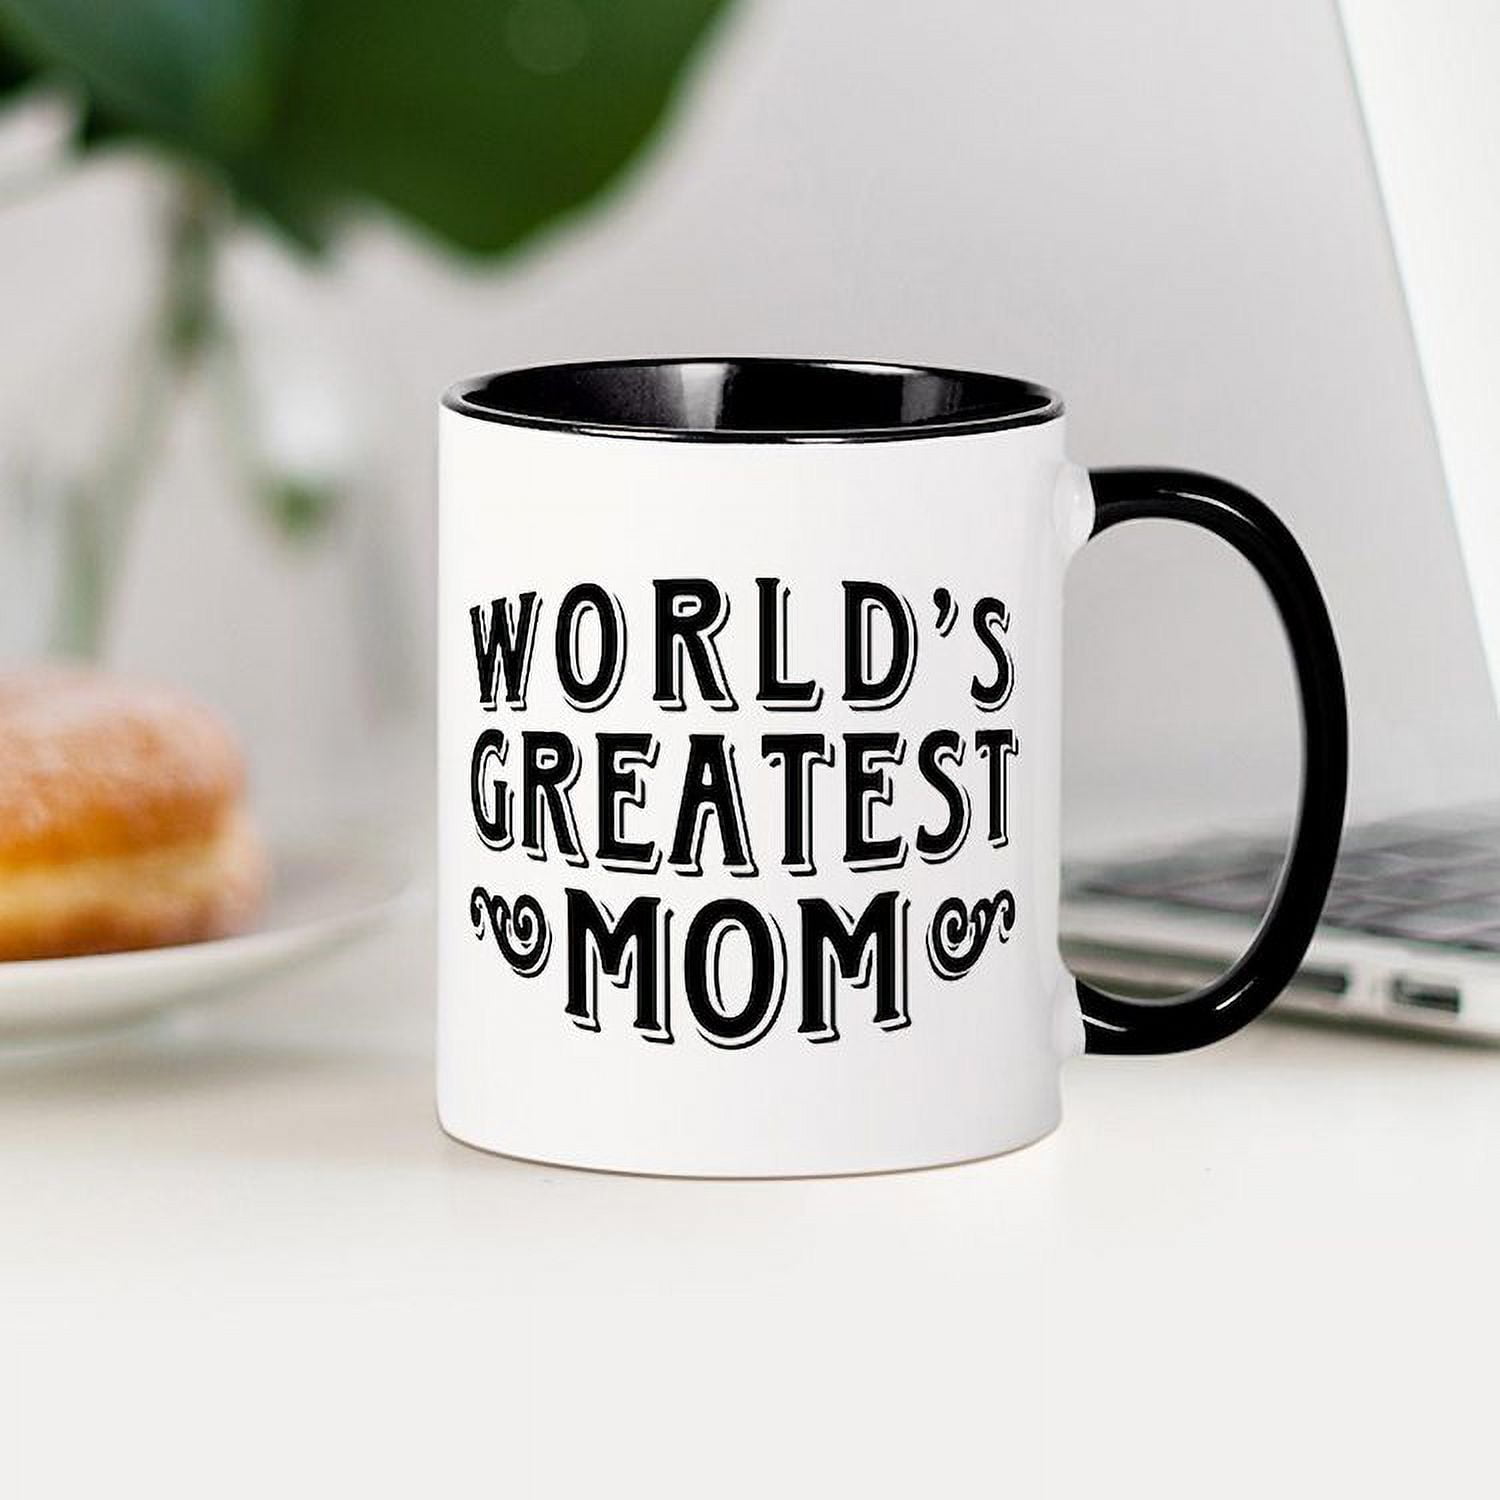 World's Best Mama Coffee Mug, 11oz – CasaQ